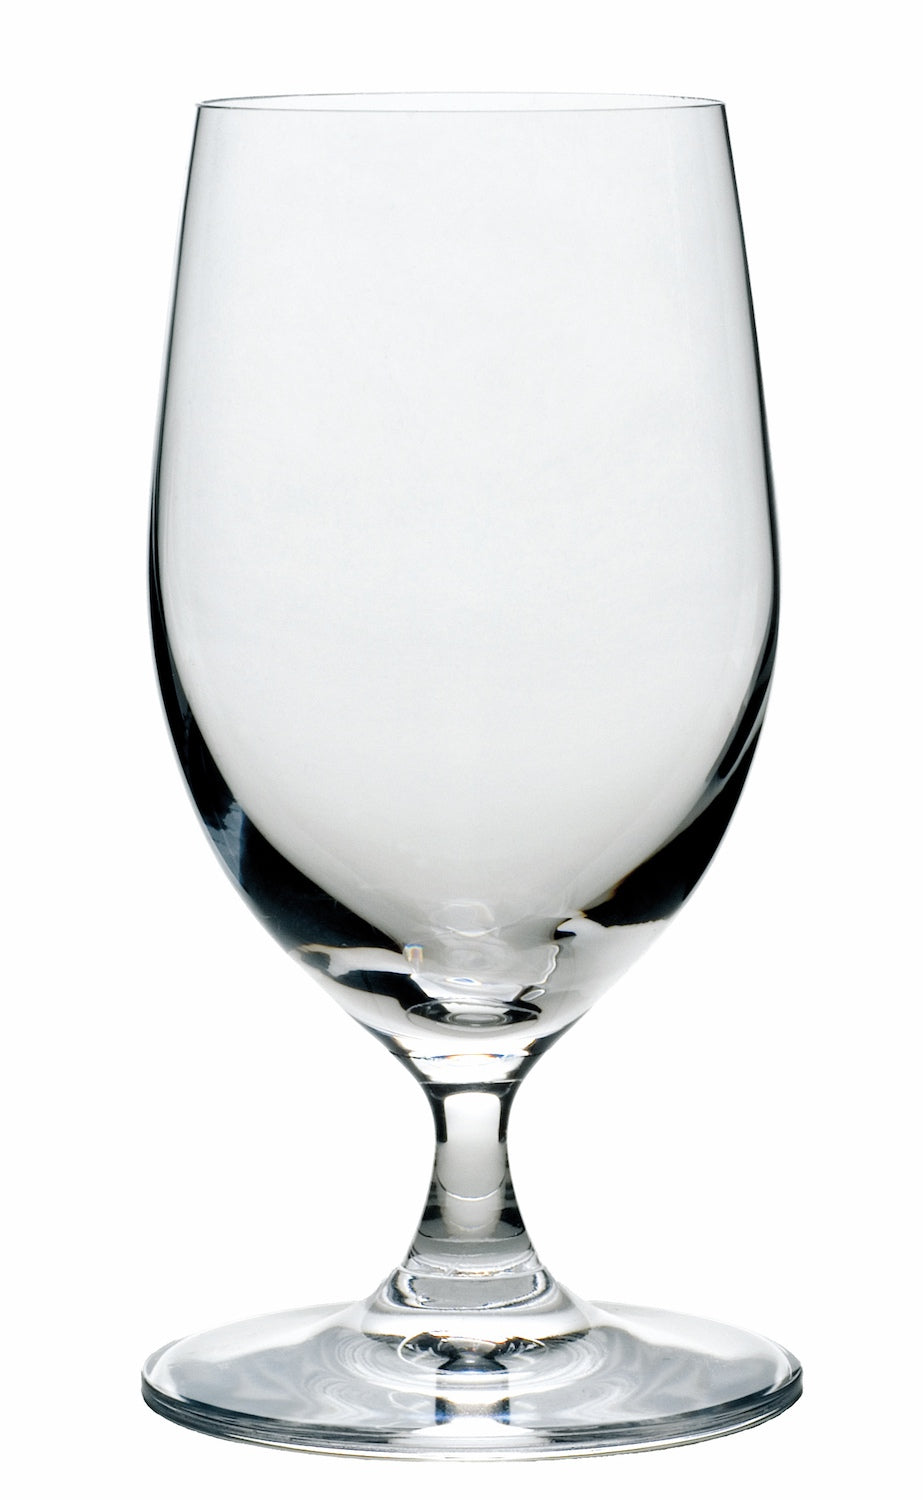 Stoelzle Lausitz Mineralwasser Glas 295 ml